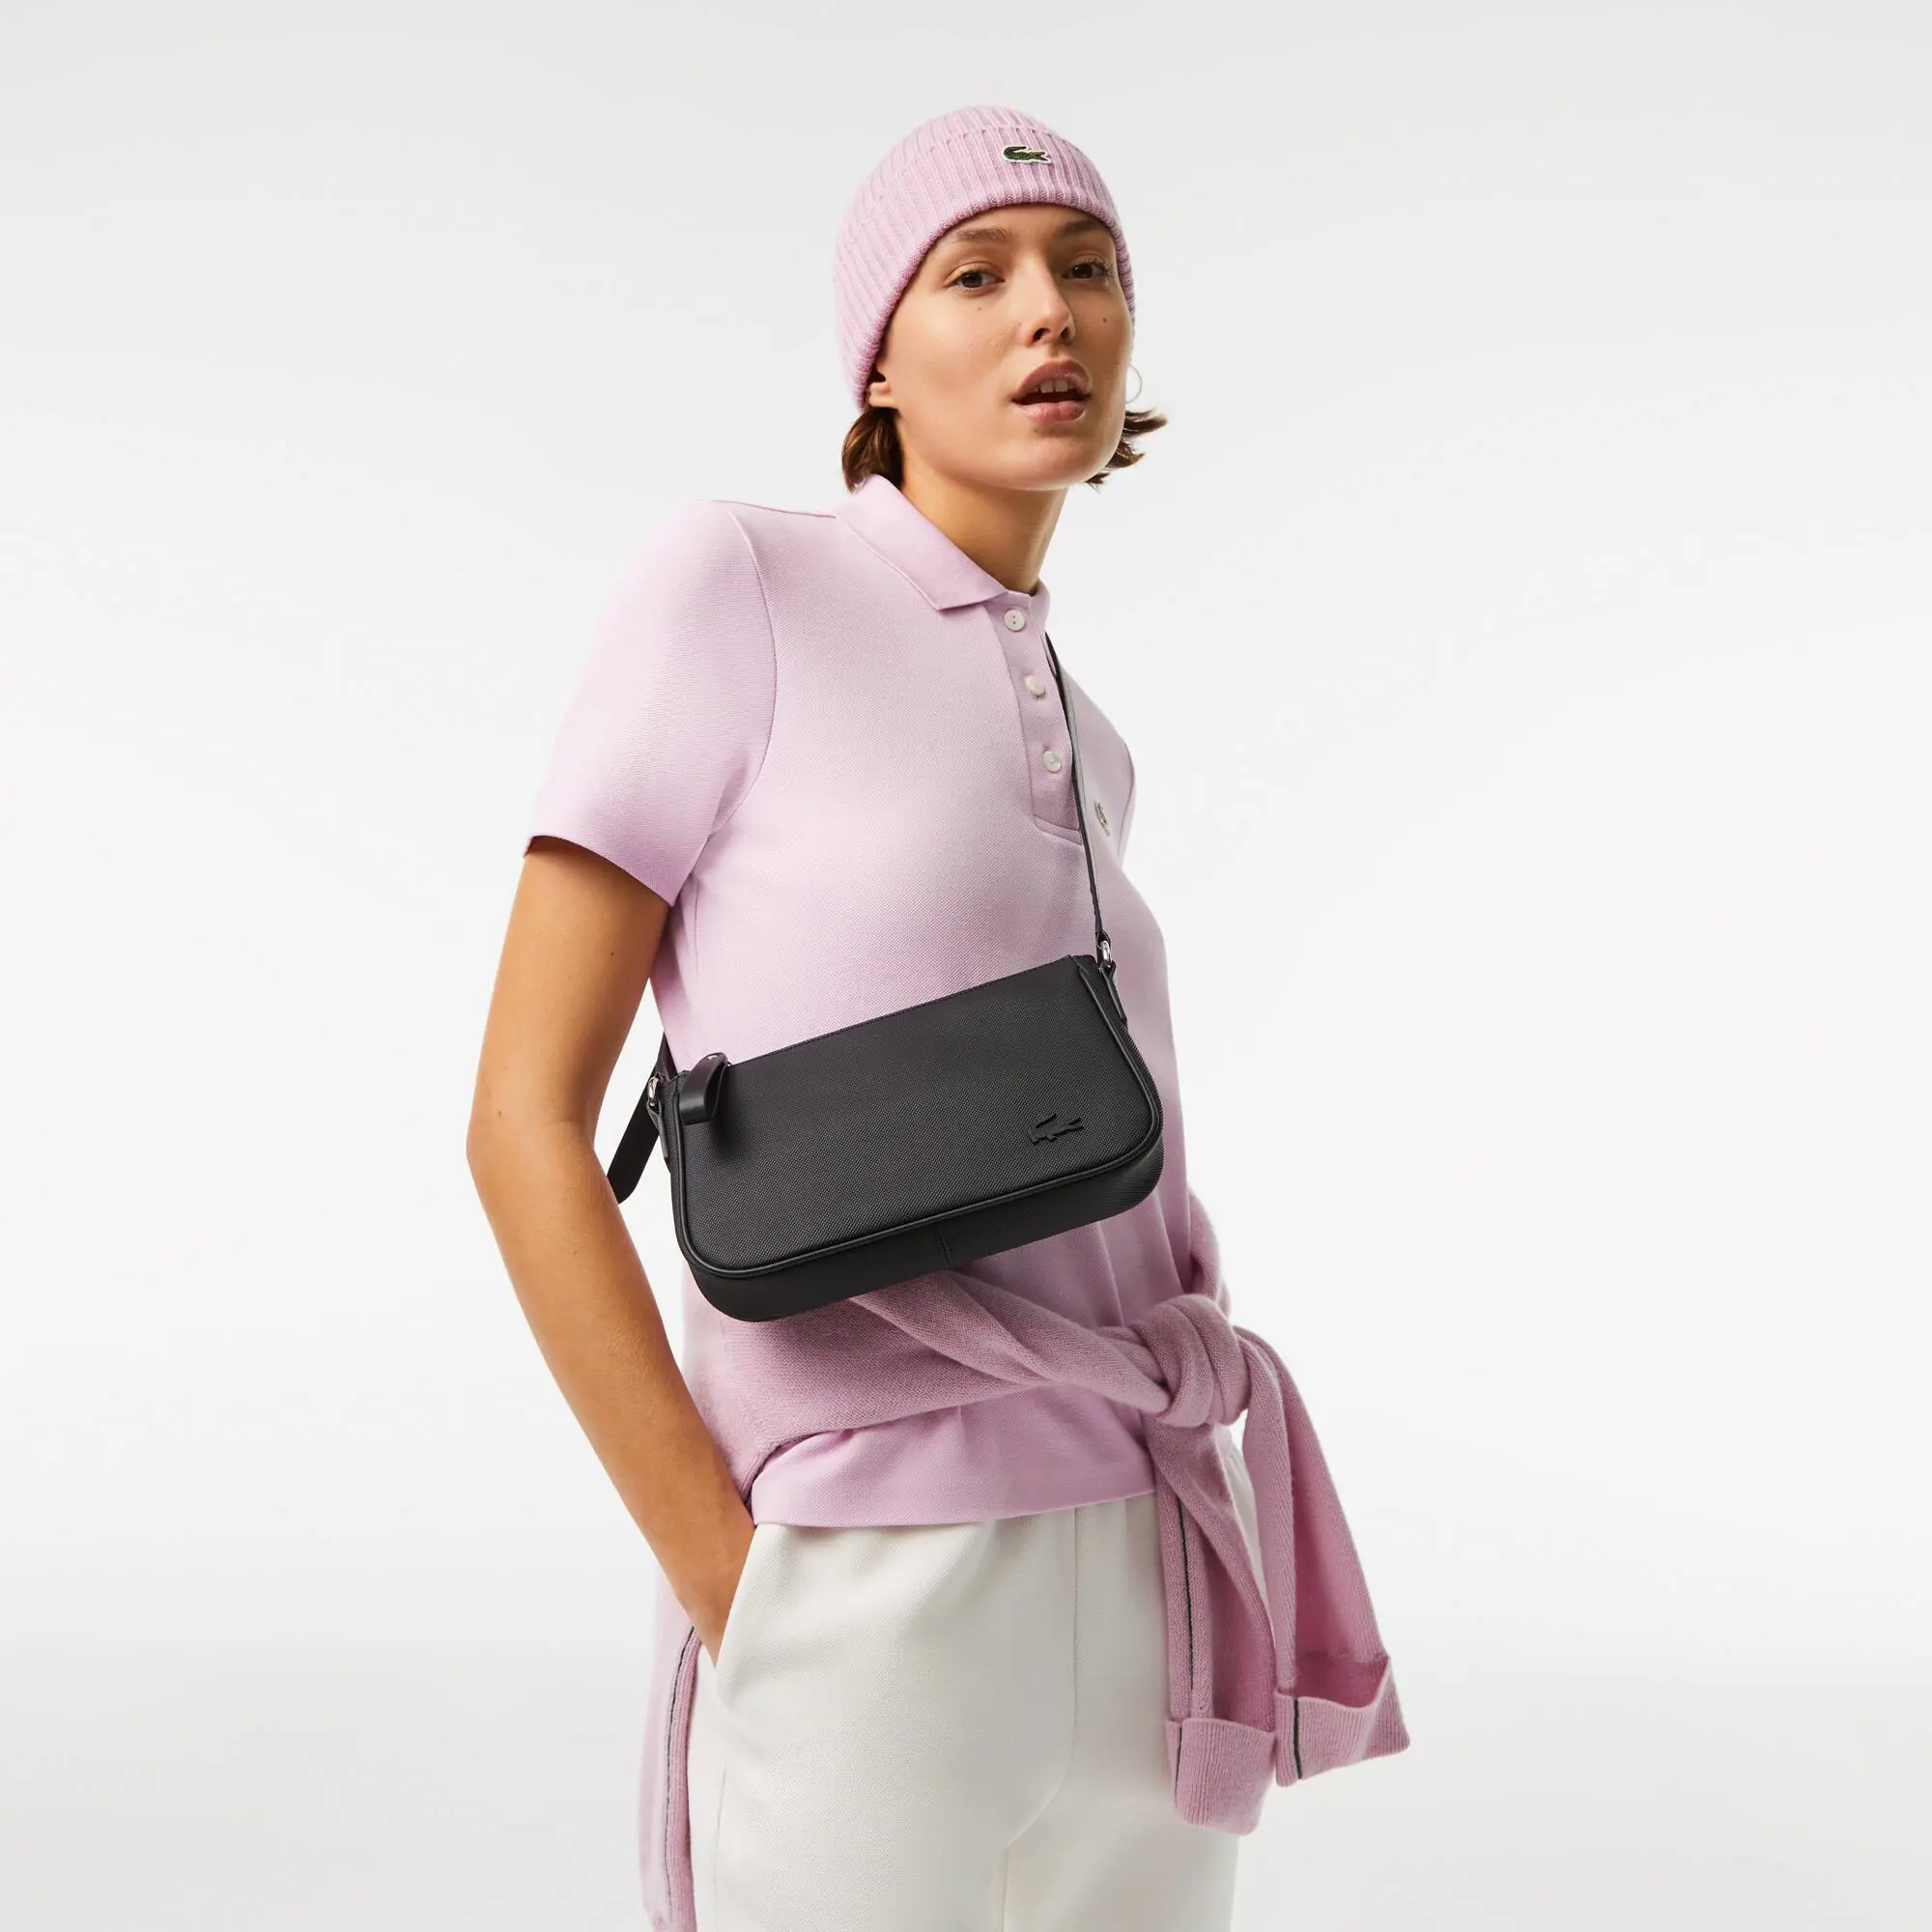 Lacoste Women's Lacoste Adjustable Strap Crossover Bag. 1